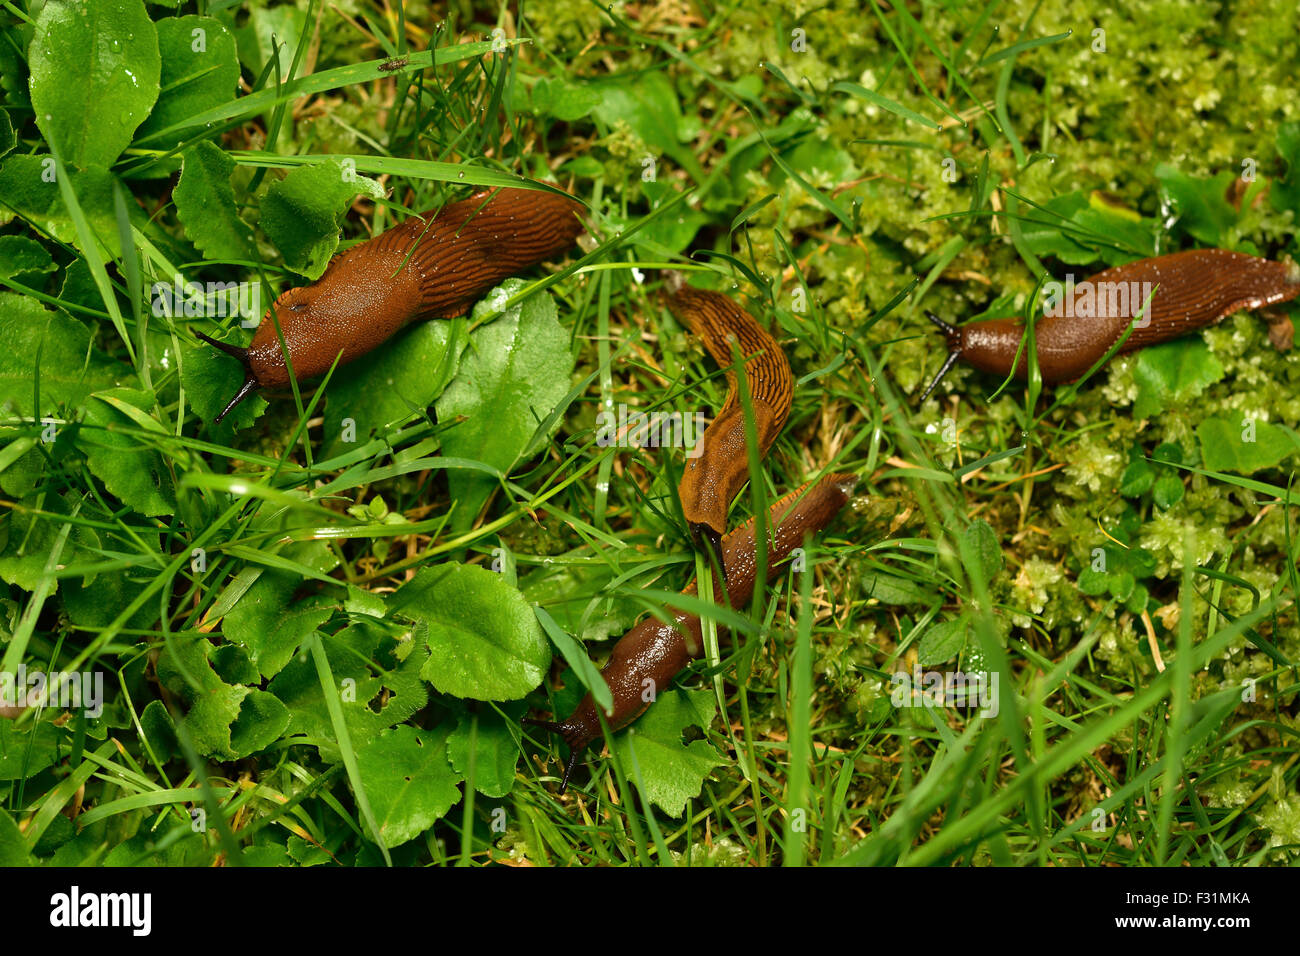 Spanish slugs (Arion vulgaris) invasion in garden. Few slugs on a grass. Garden problem. Europe. Stock Photo